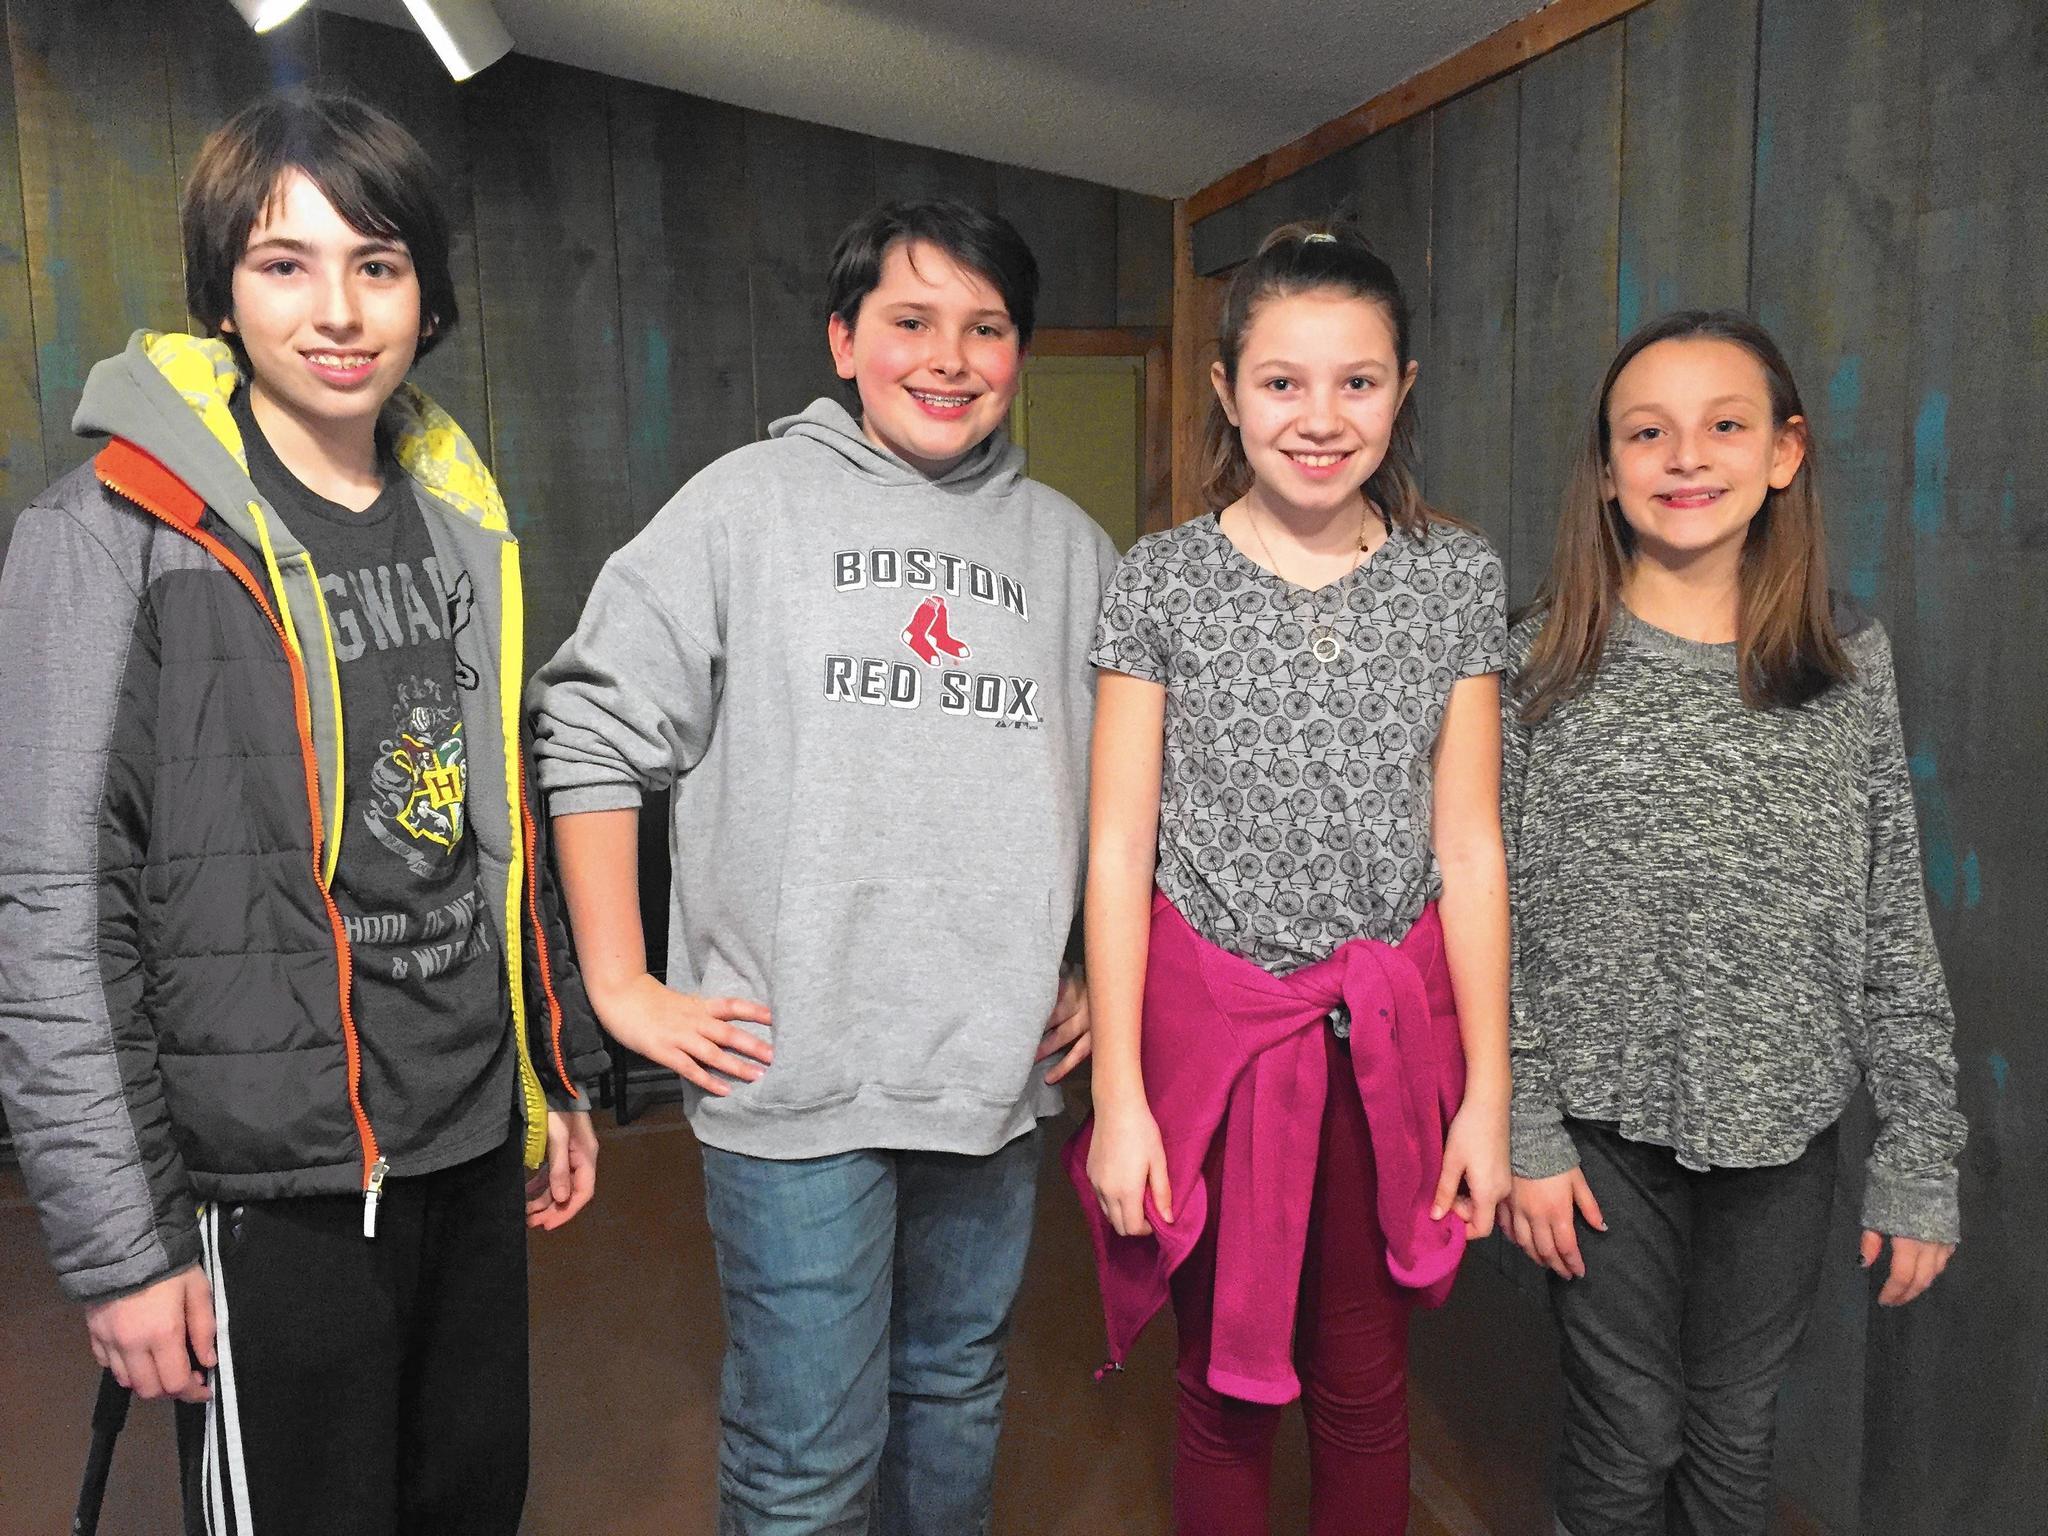 Young Actors Create Original Play At Avon Acting Studio - Hartford Courant